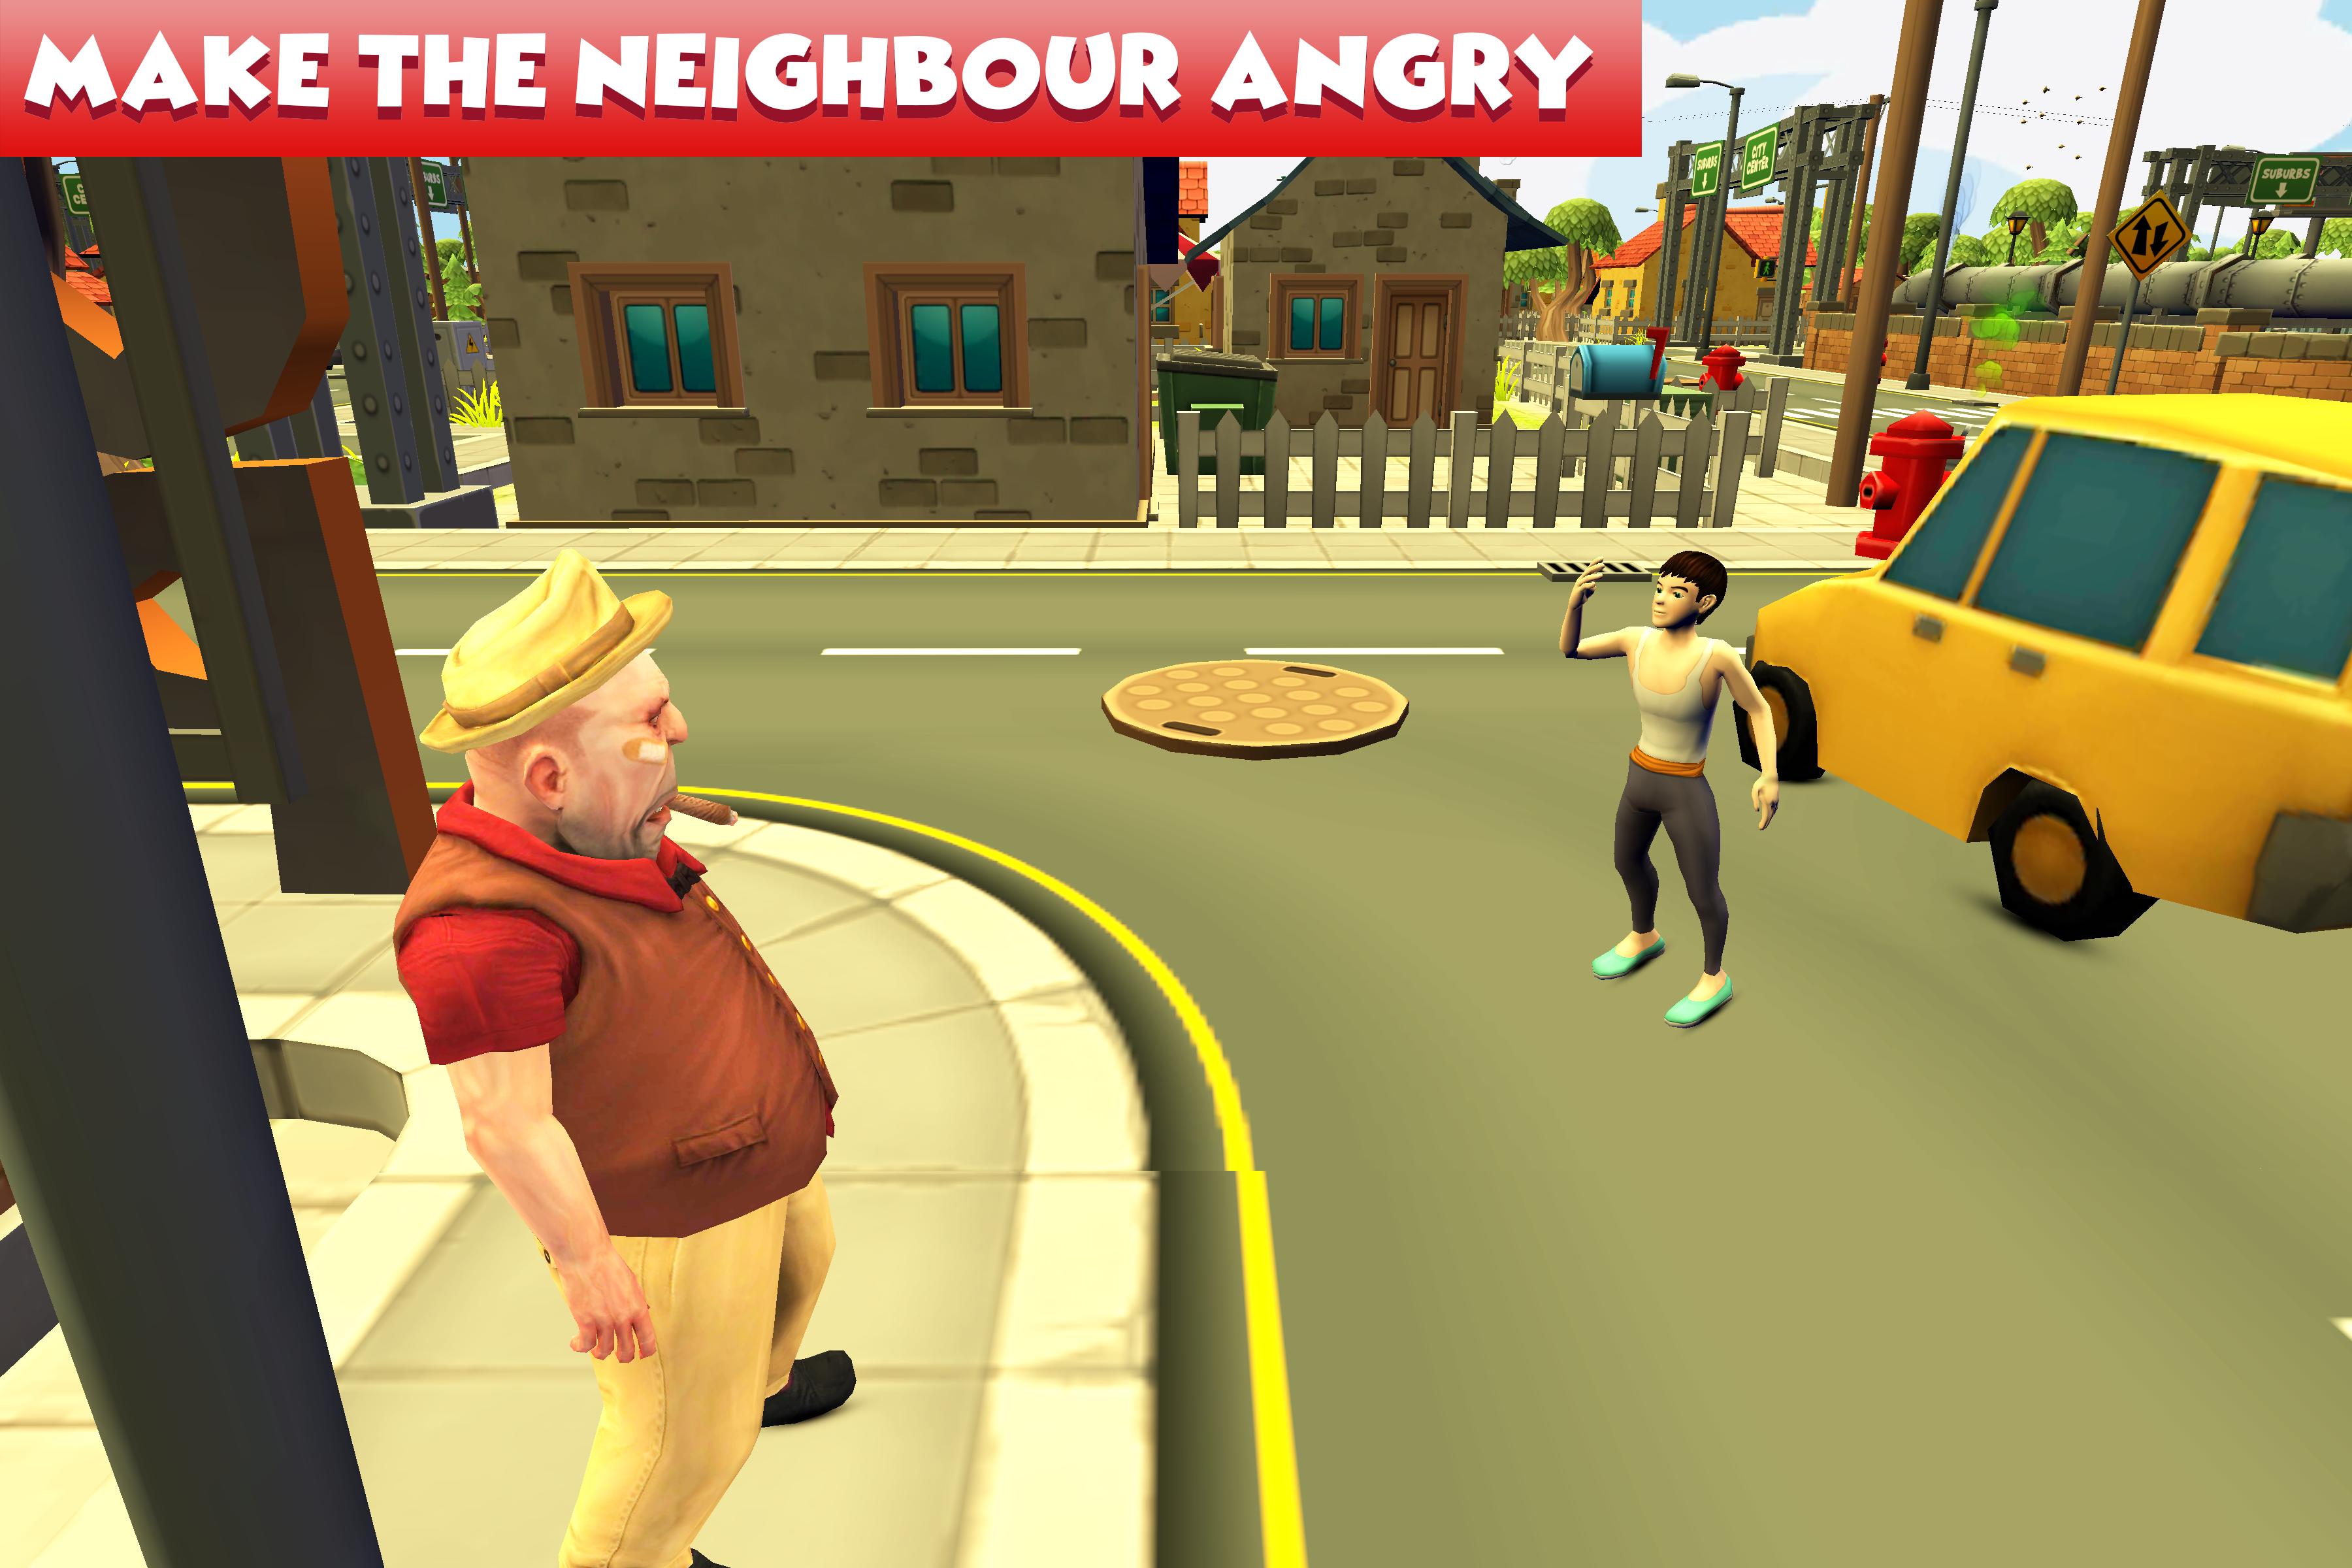 Neighbours simulator. Симулятор соседа. Побег от сердитого соседа. Игра новый клоун сосед. Побег от соседа игра.